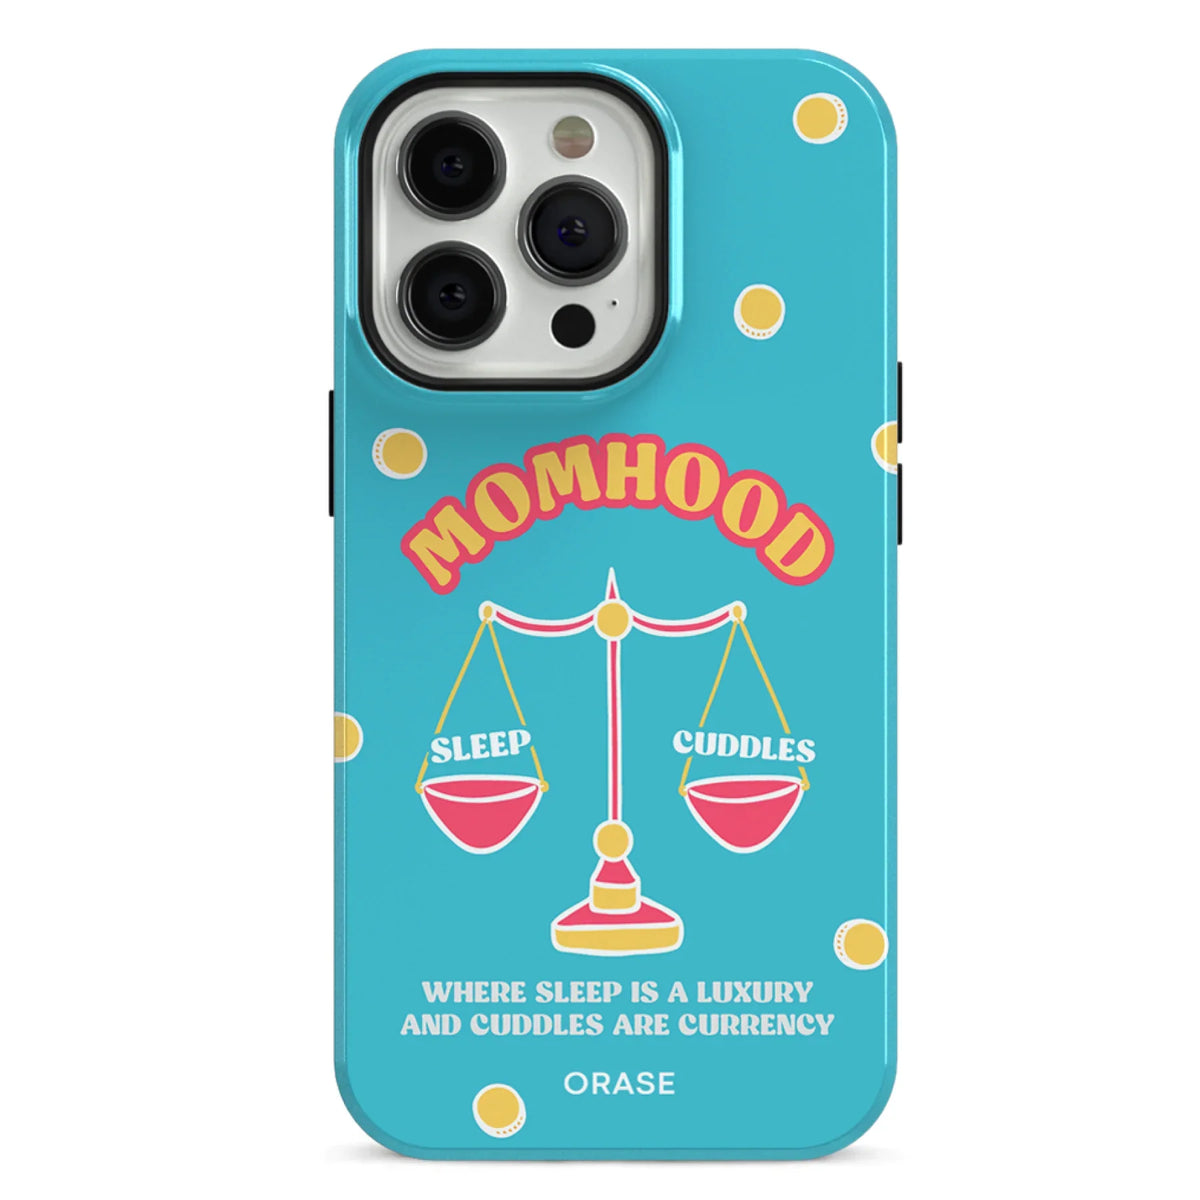 Momhood iPhone Case - iPhone 12 Pro Max